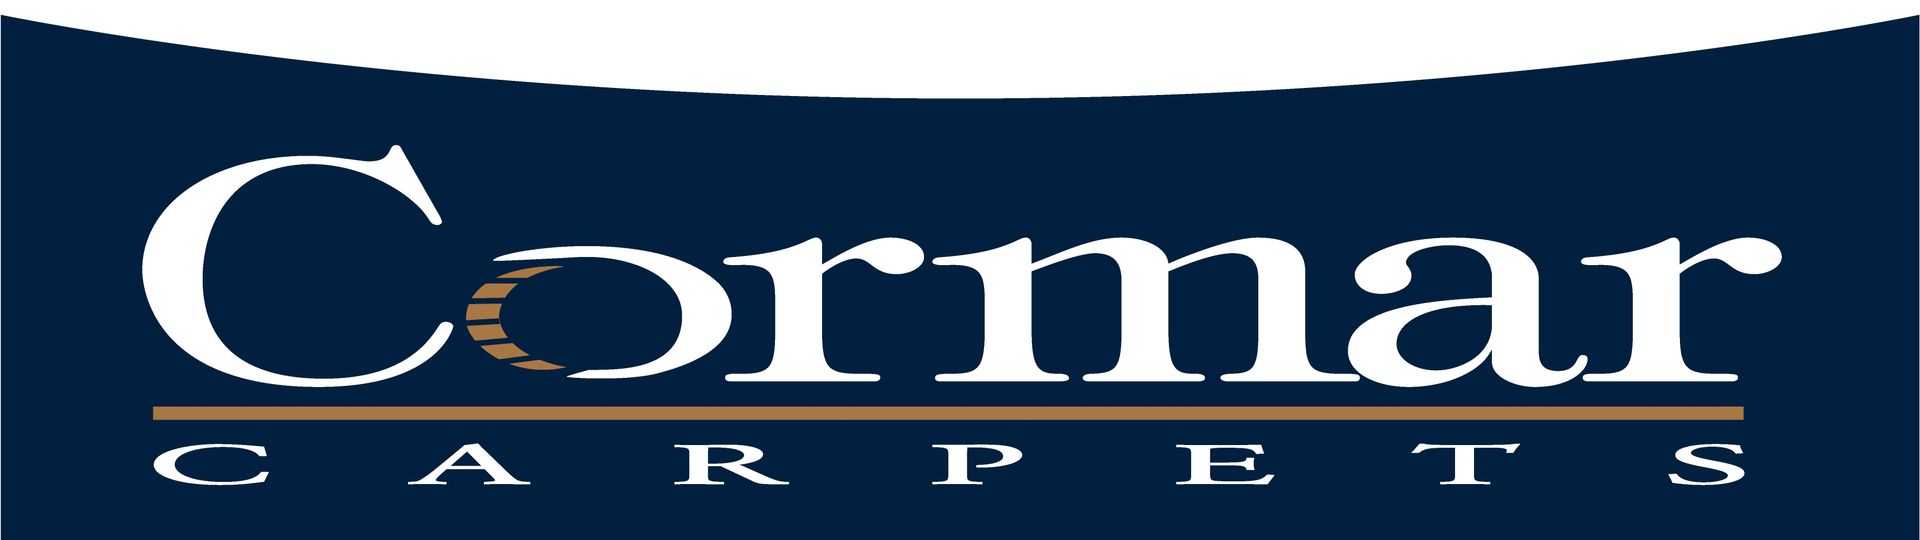 Logo of Cormar